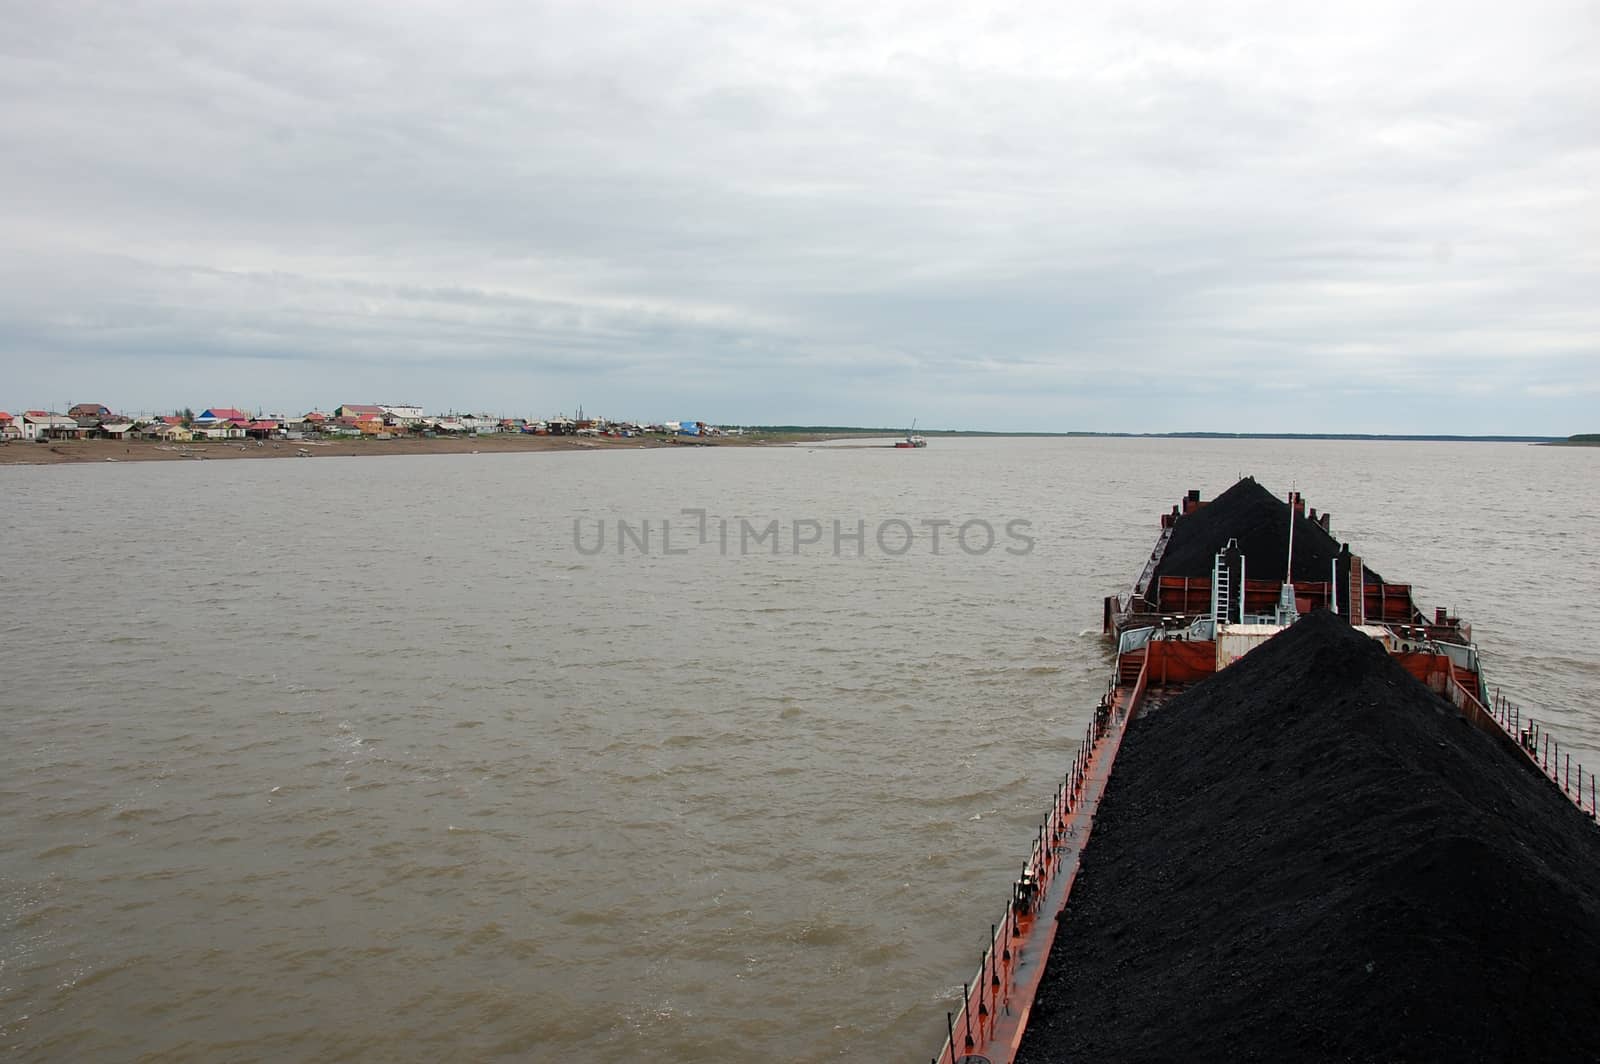 Ship with coal at Kolyma river near village, Yakutia region, Russia